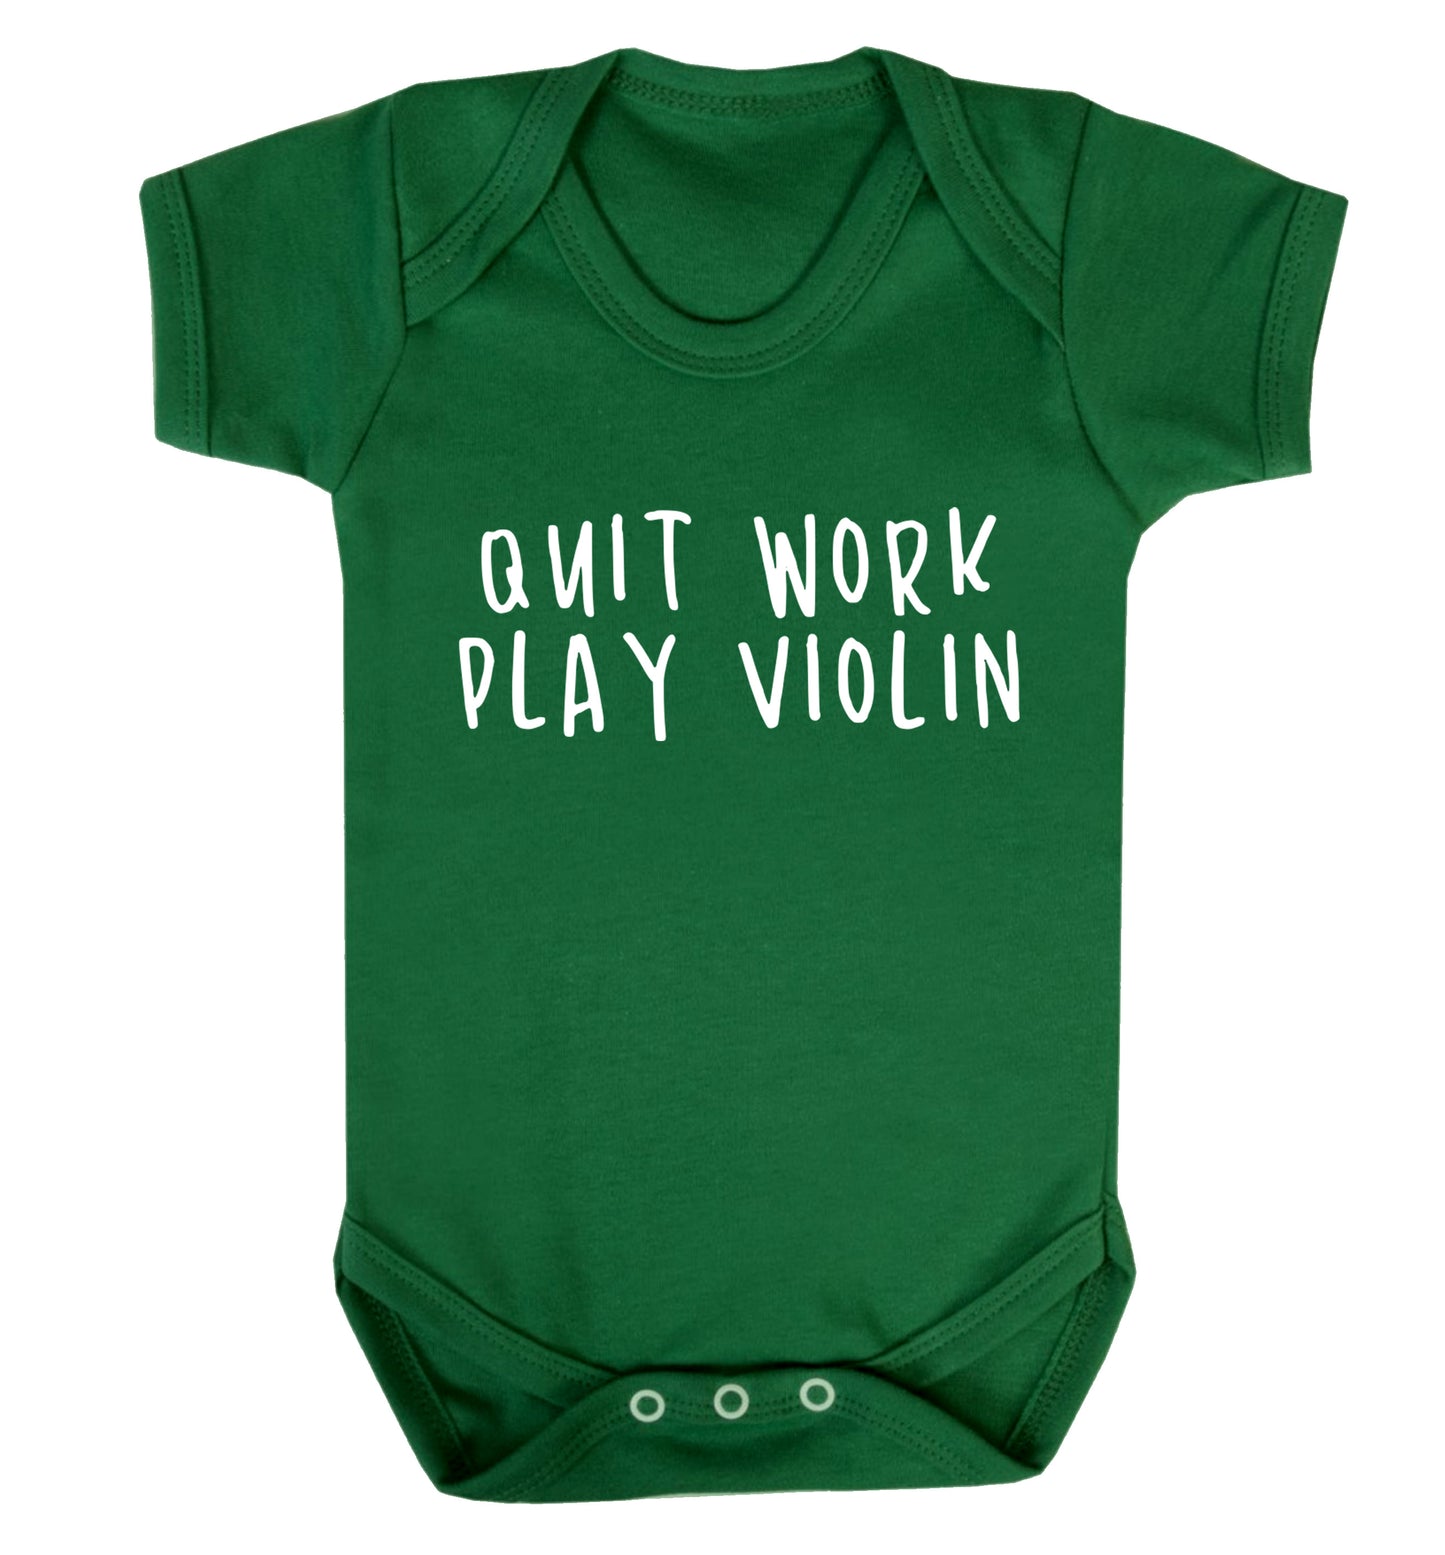 Quit work play violin Baby Vest green 18-24 months